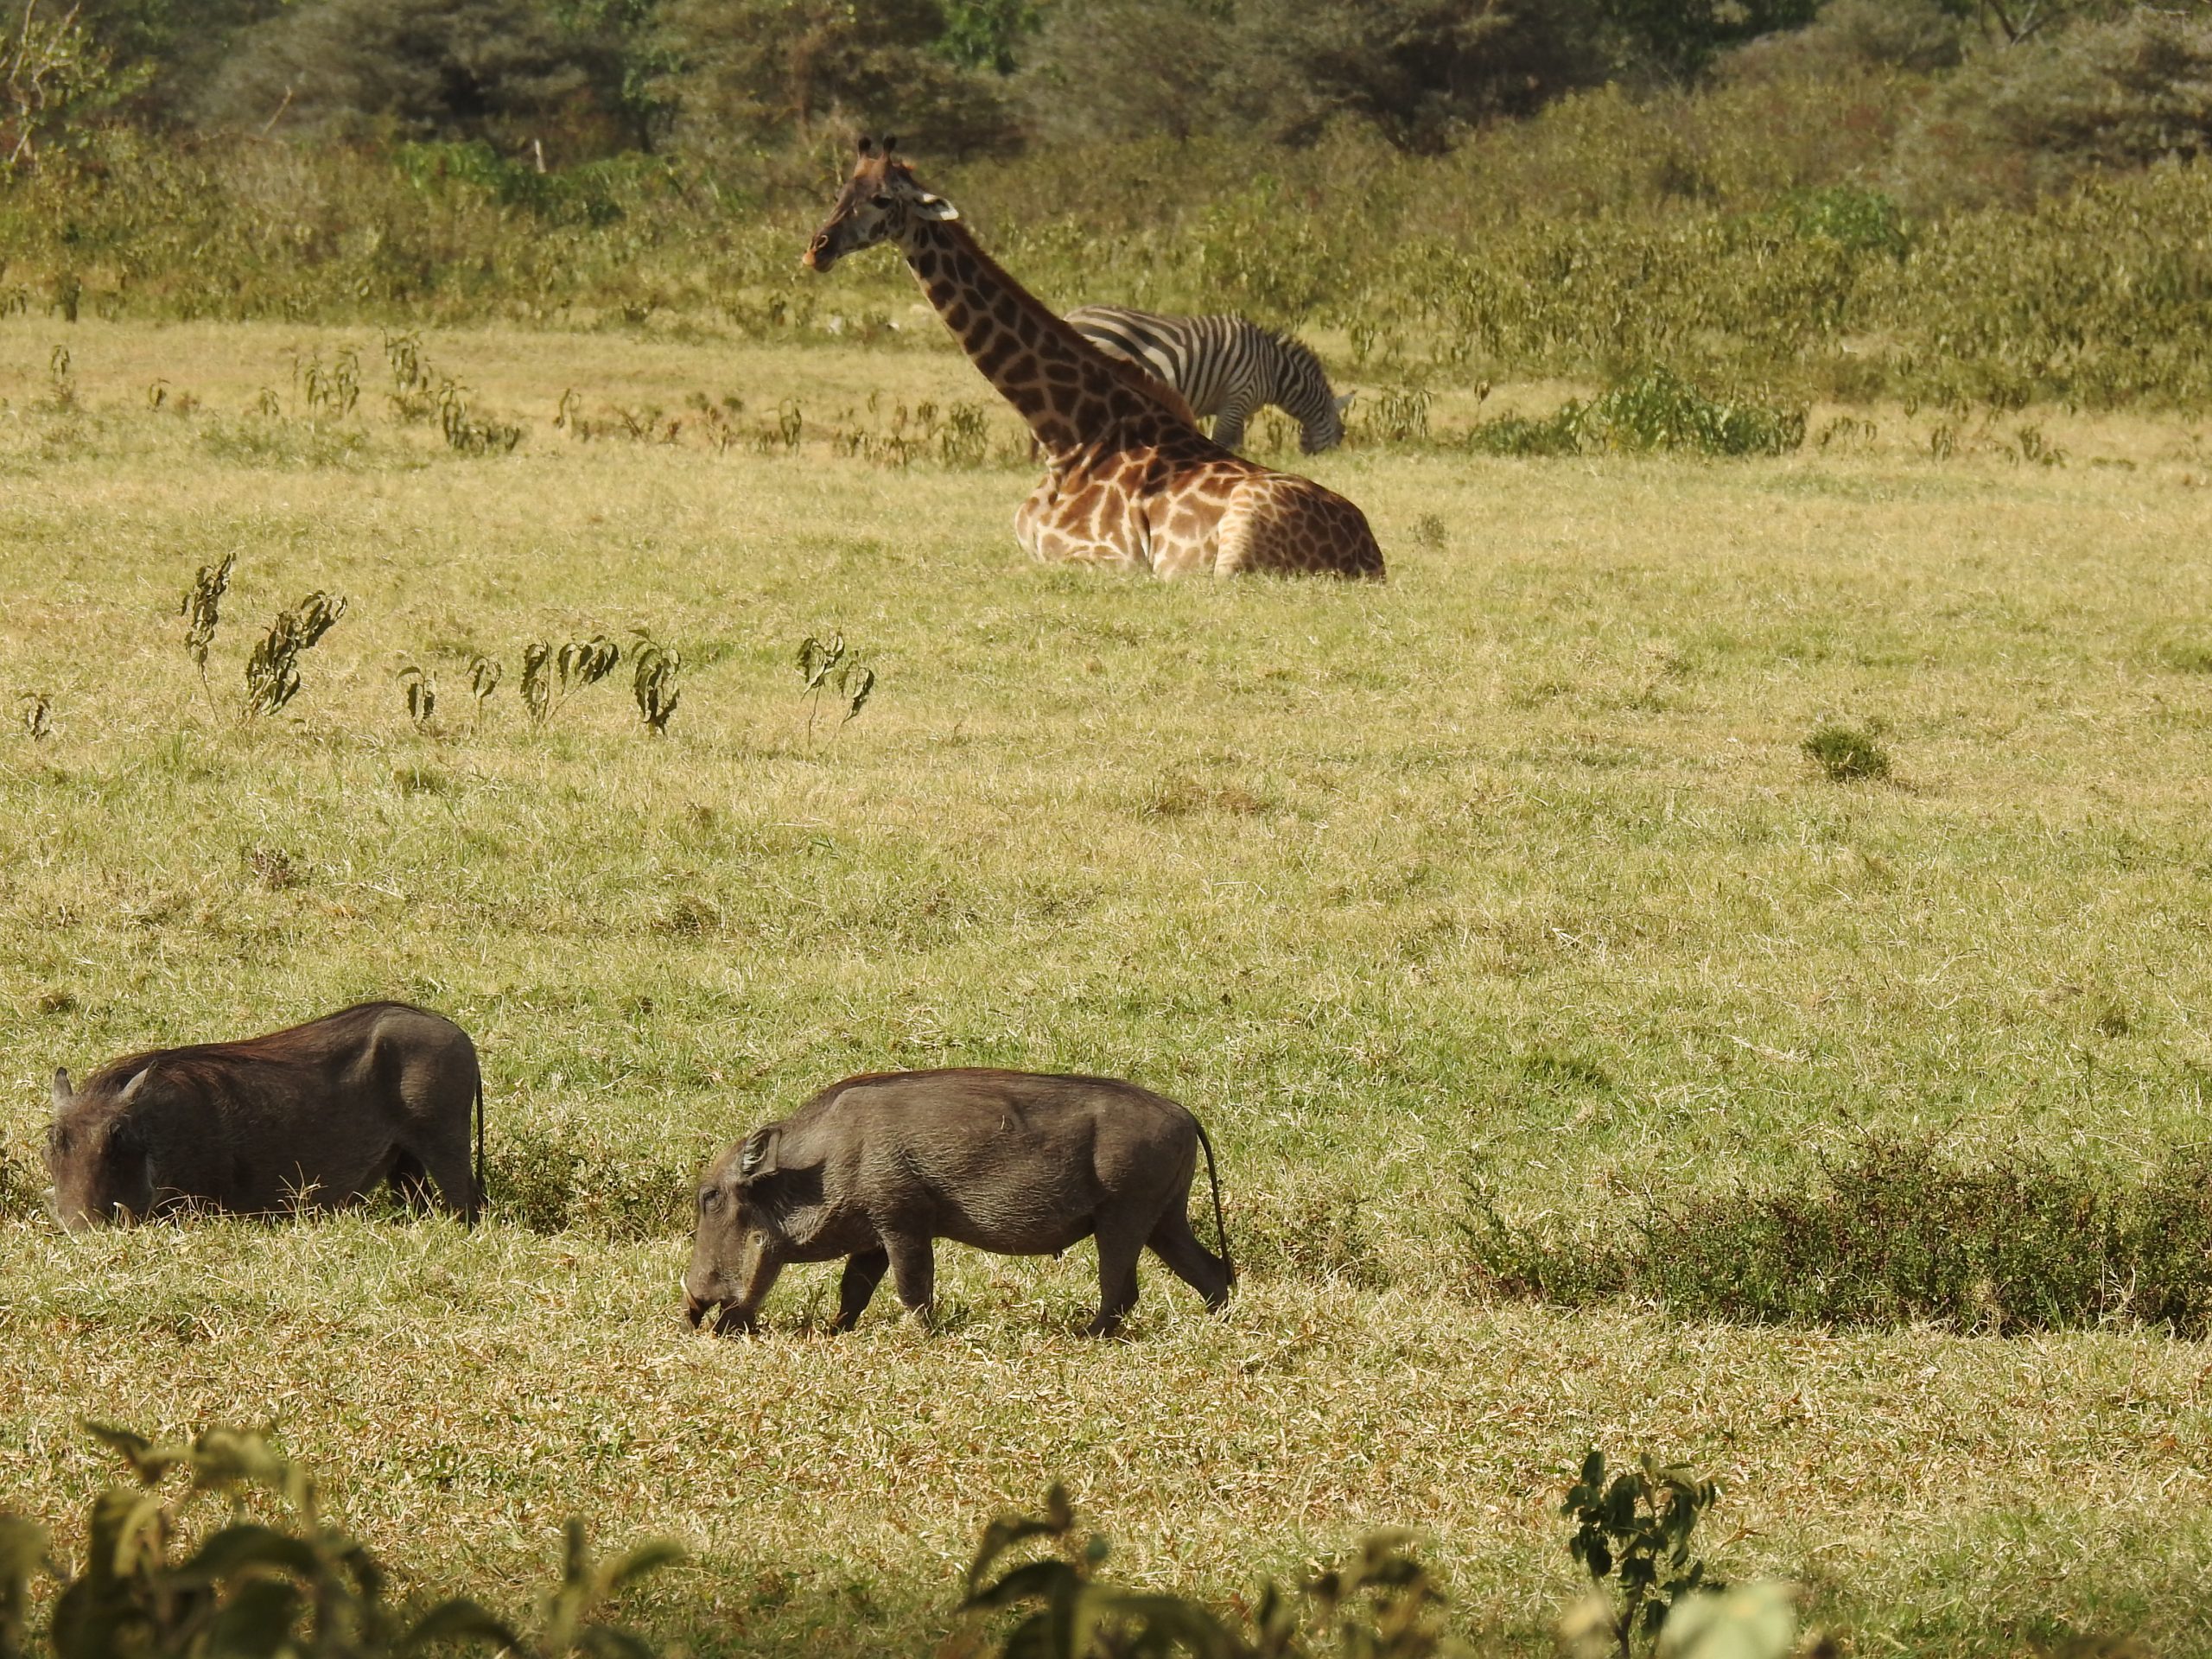 Arusha wildlife